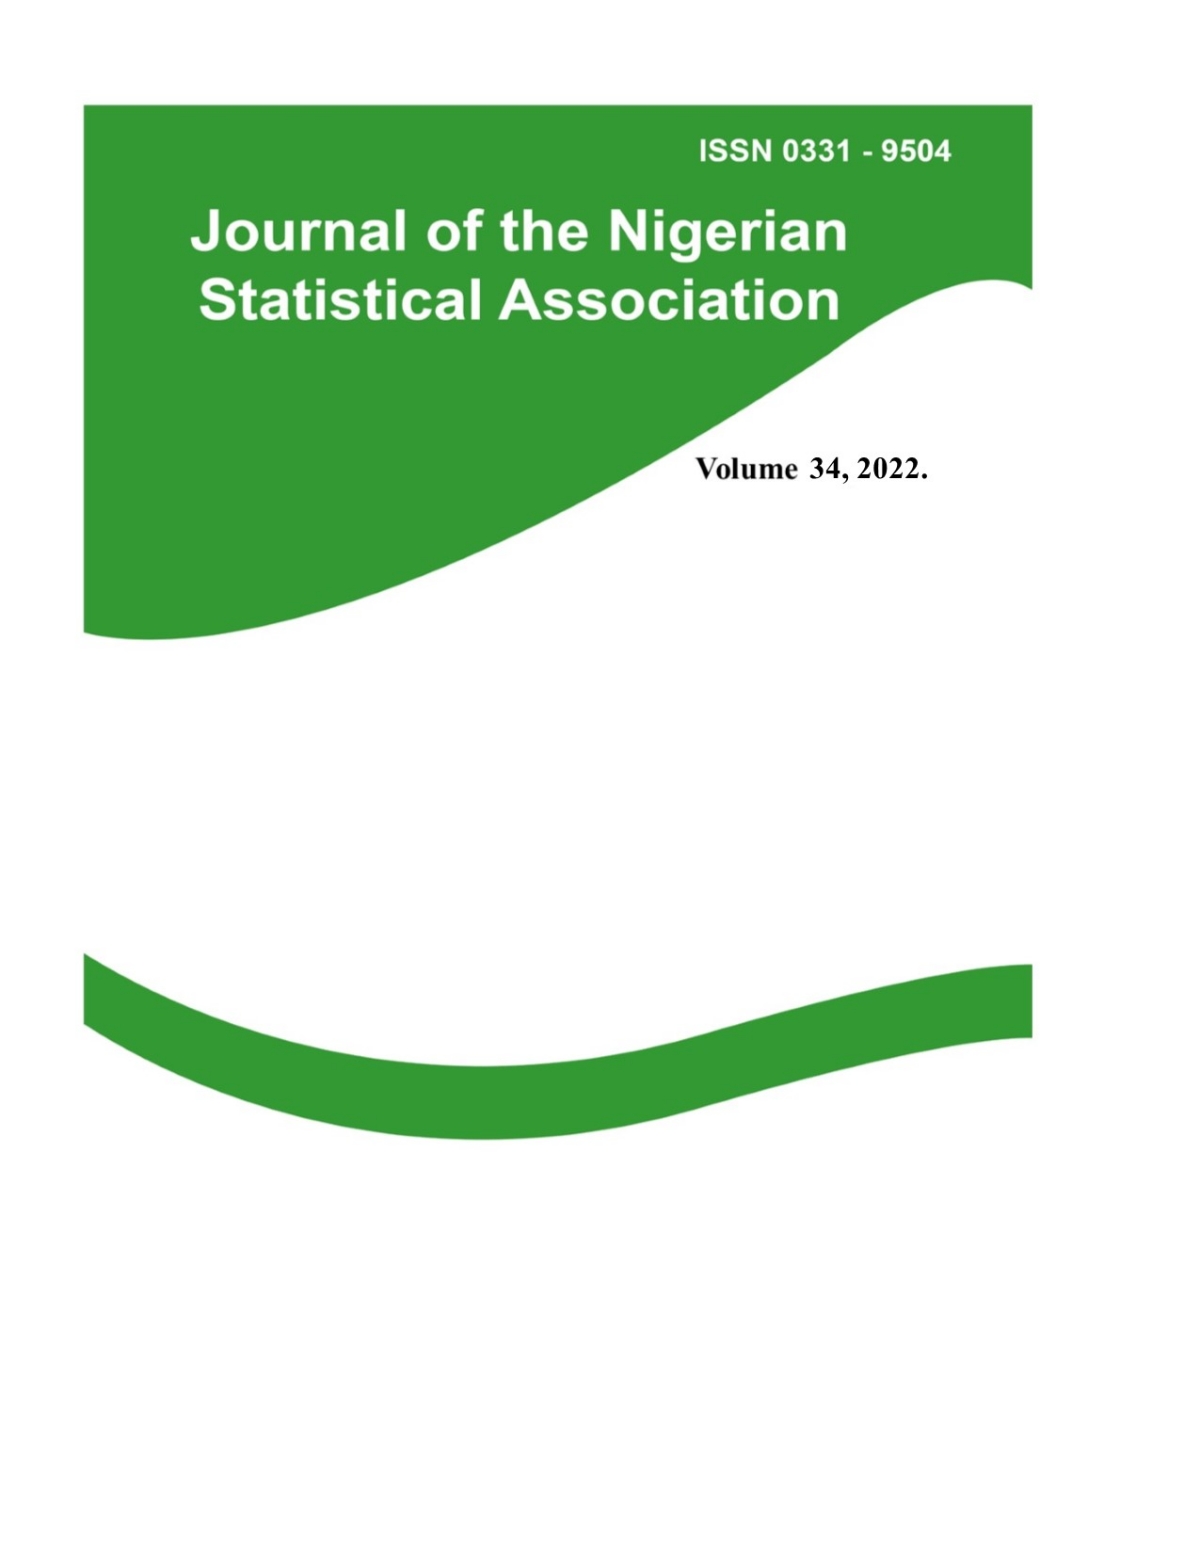 Journal of the Nigerian Statistical Association, Vol,34,2022.